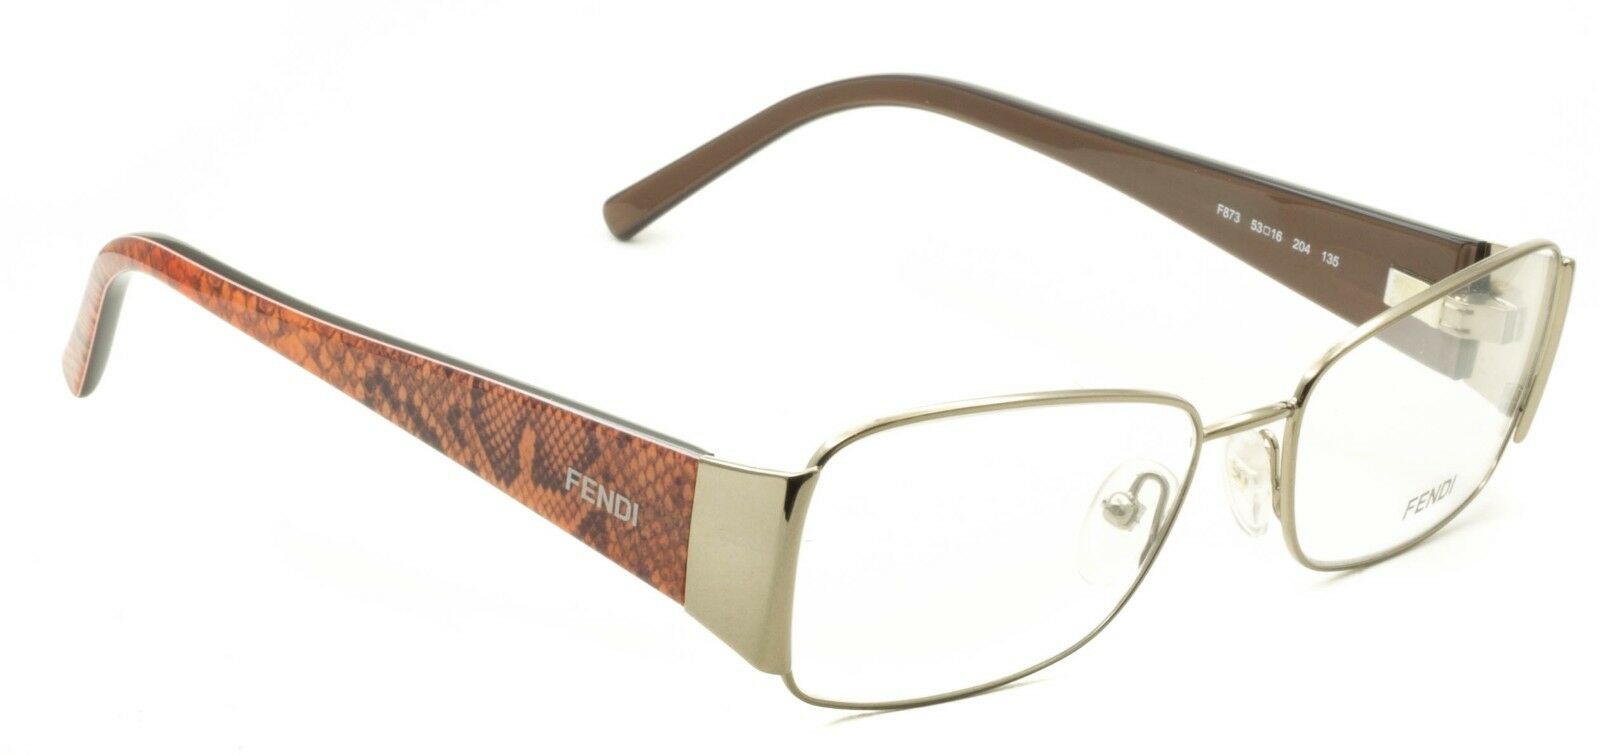 FENDI F873 204 53mm Eyewear RX Optical FRAMES NEW Glasses Eyeglasses BNIB Italy